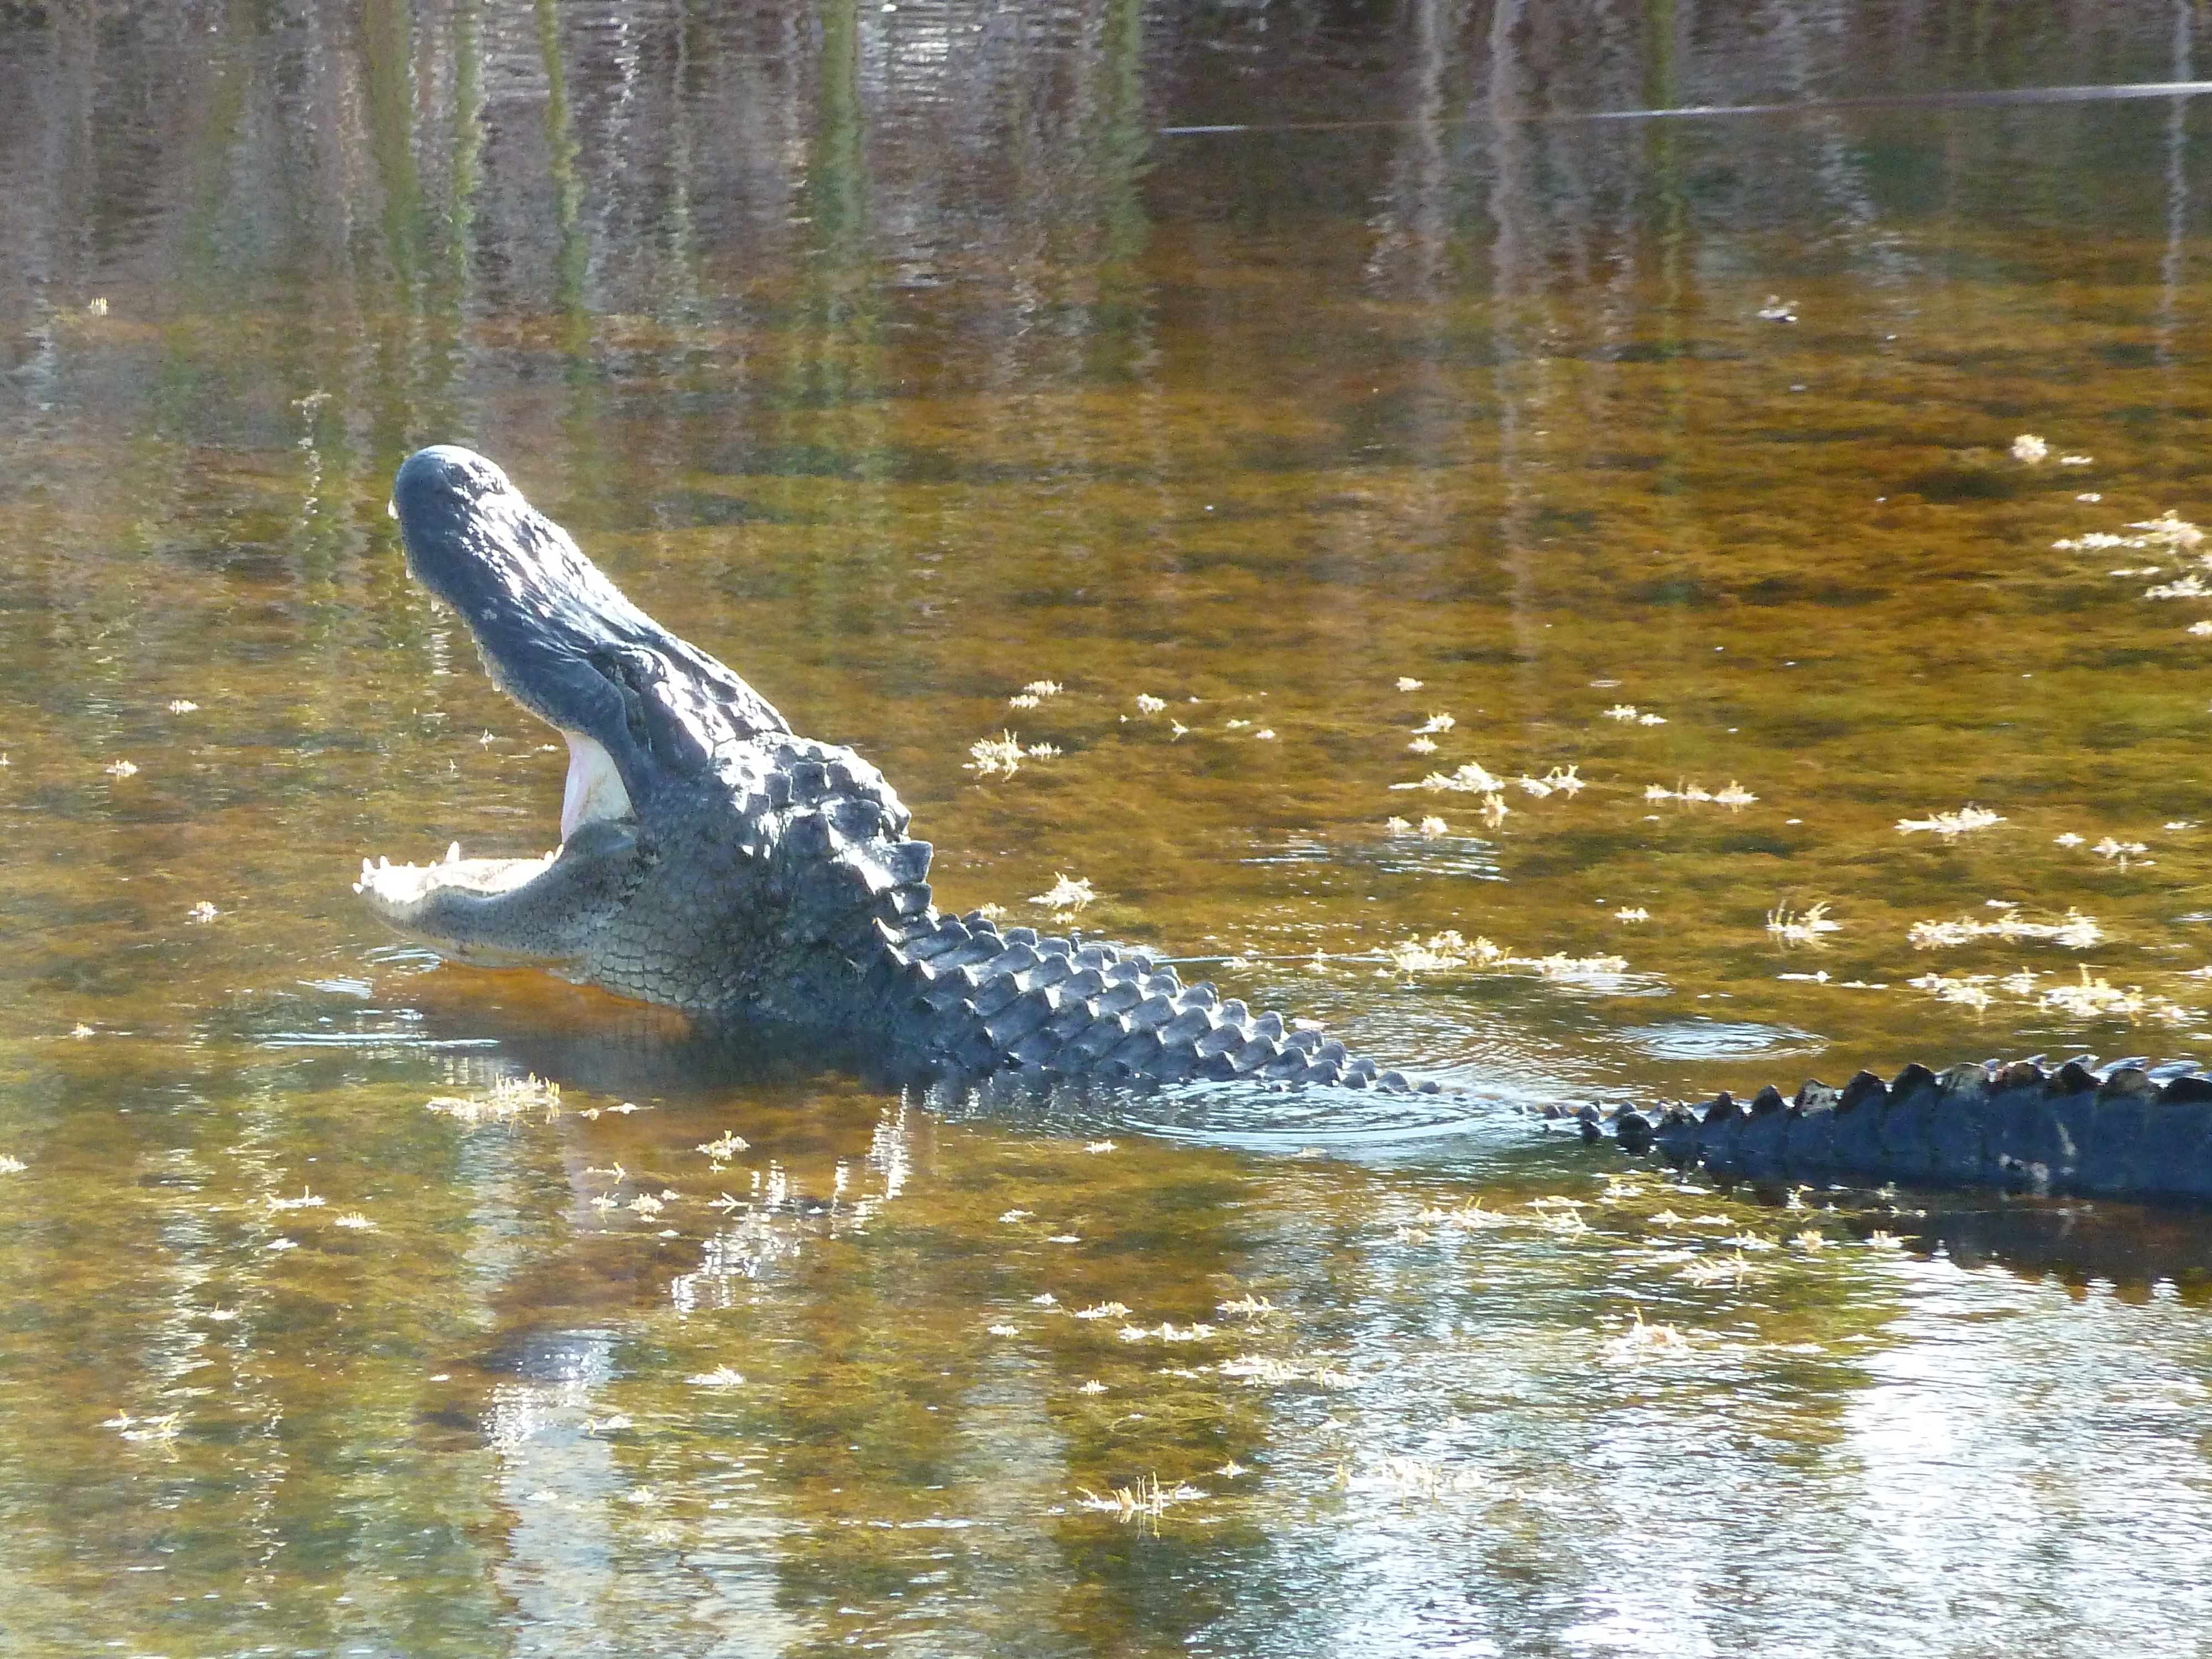 An alligator in Florida. Photo credit: M. Ciavardini